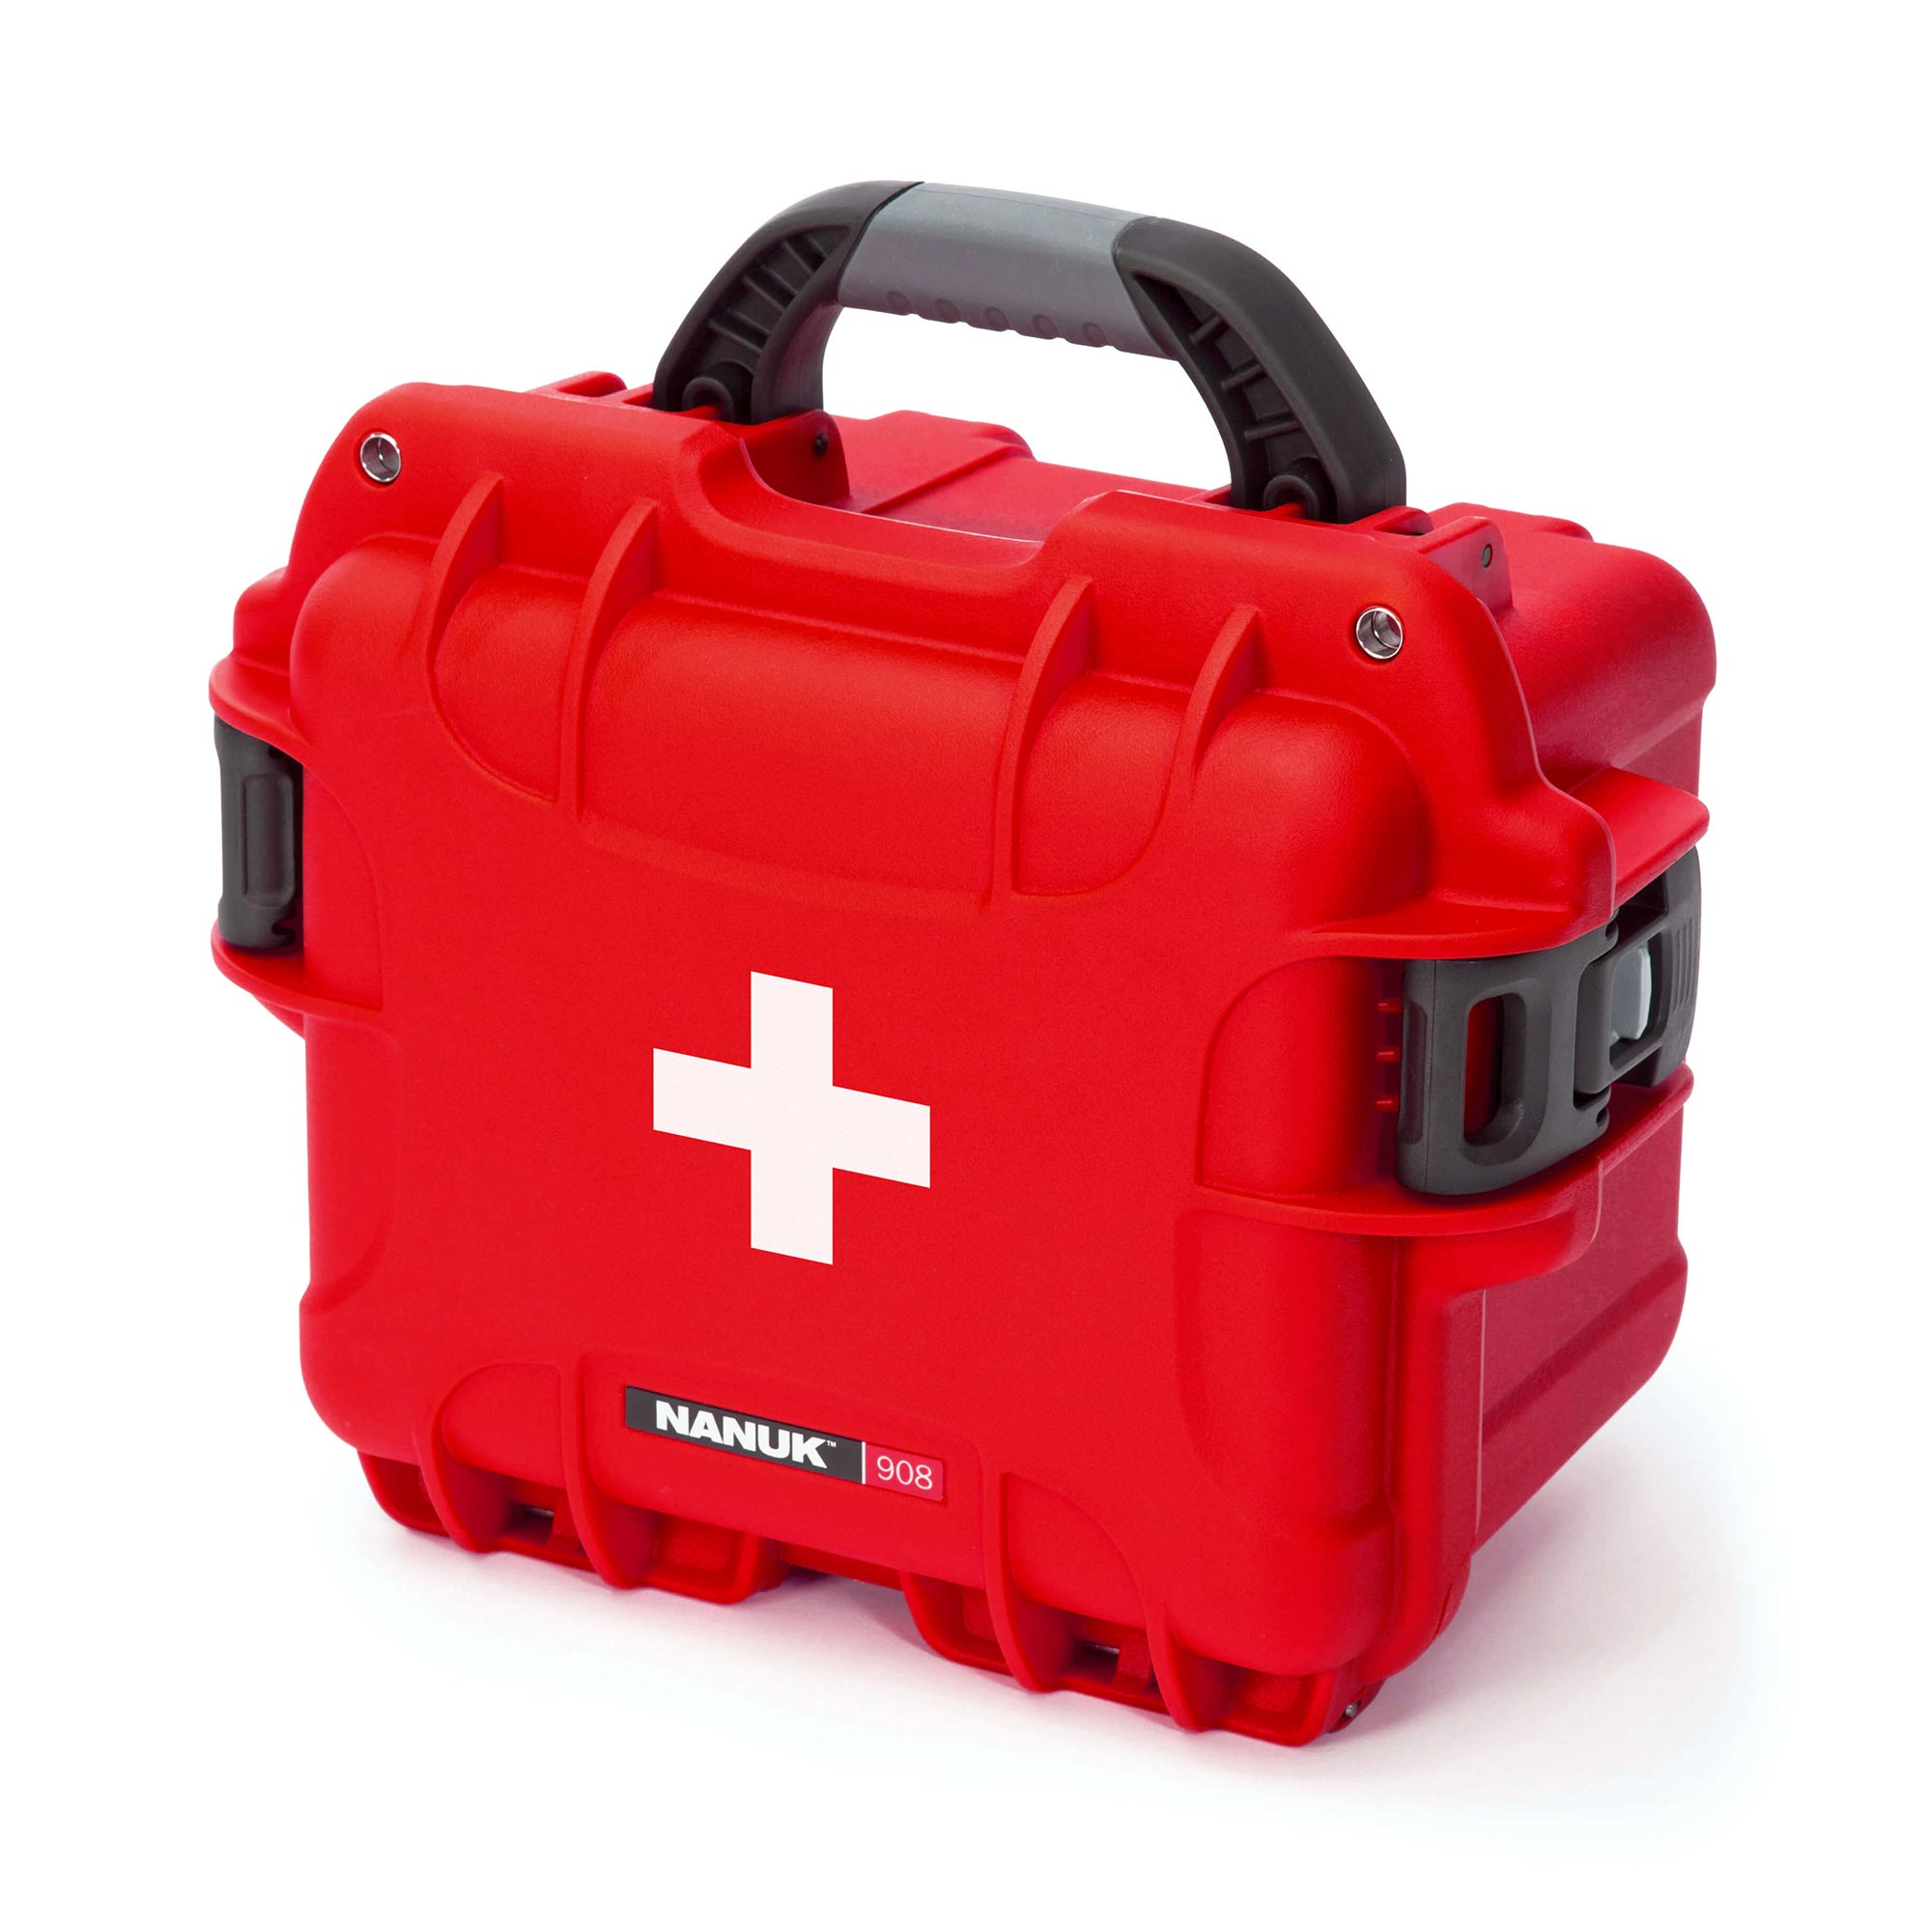 NANUK 908 First Aid valise-Outdoor Valise-Rouge-NANUK